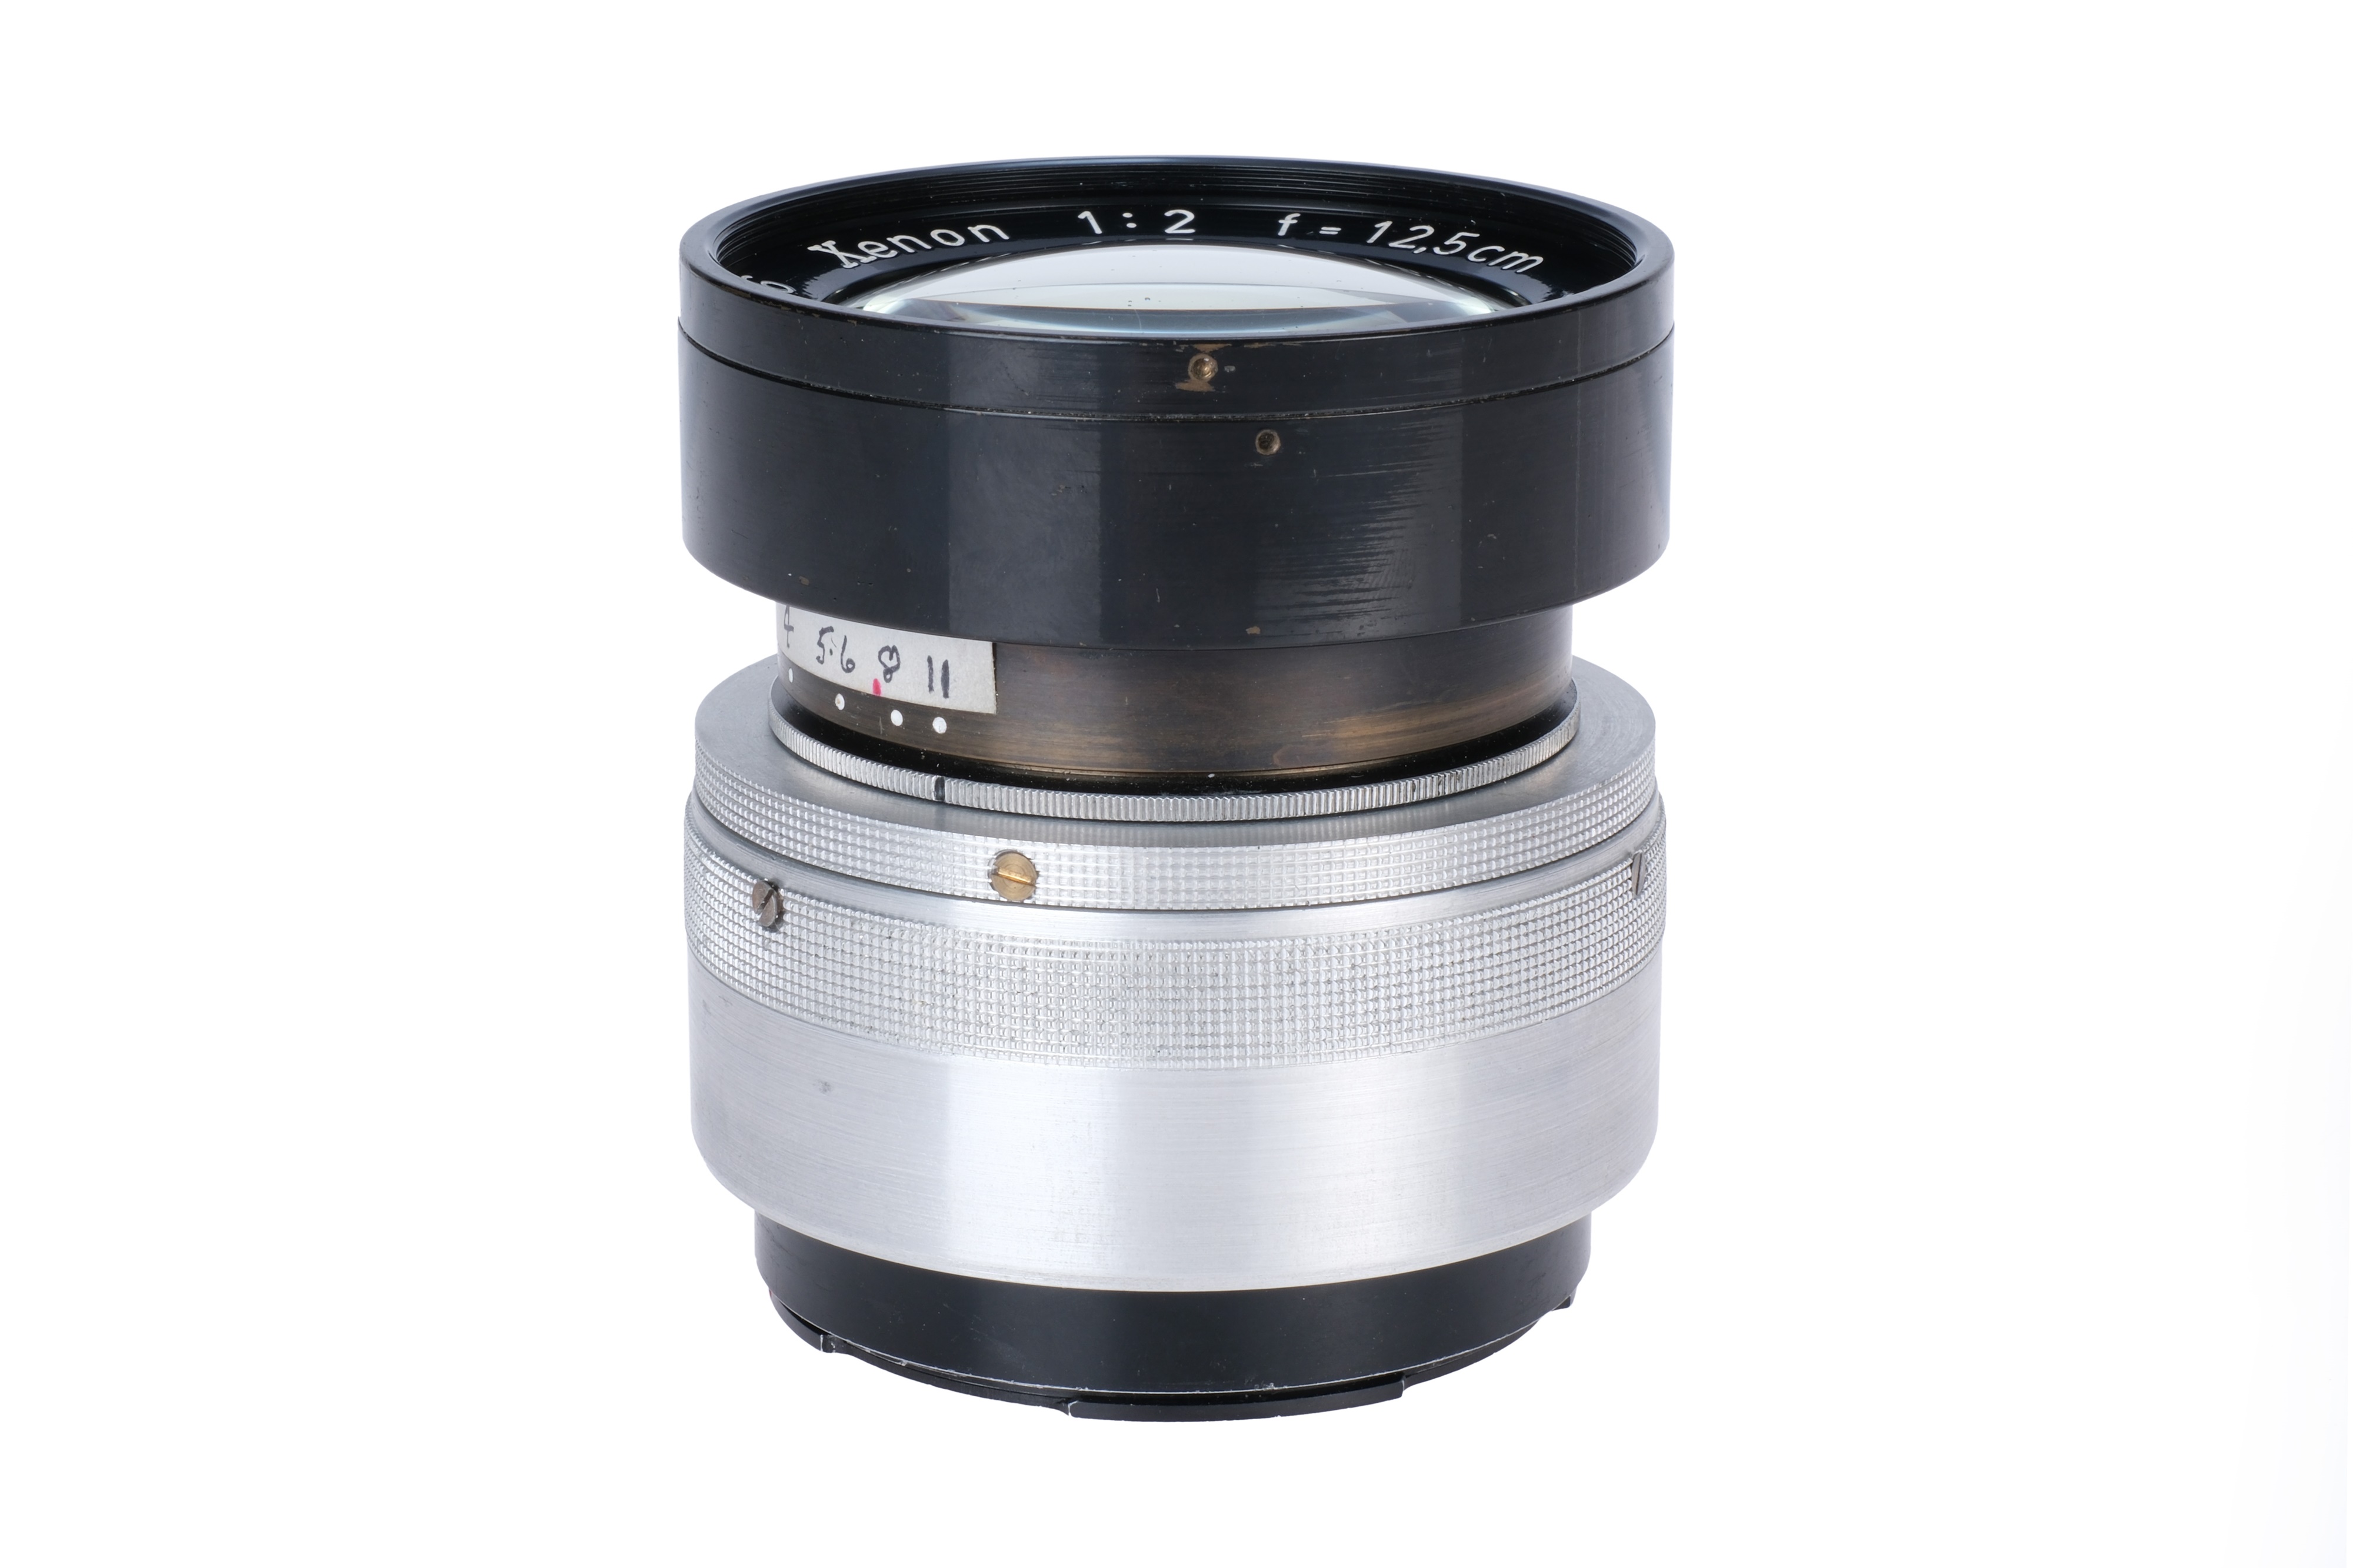 A Schneider Xenon f/2 135mm Lens,